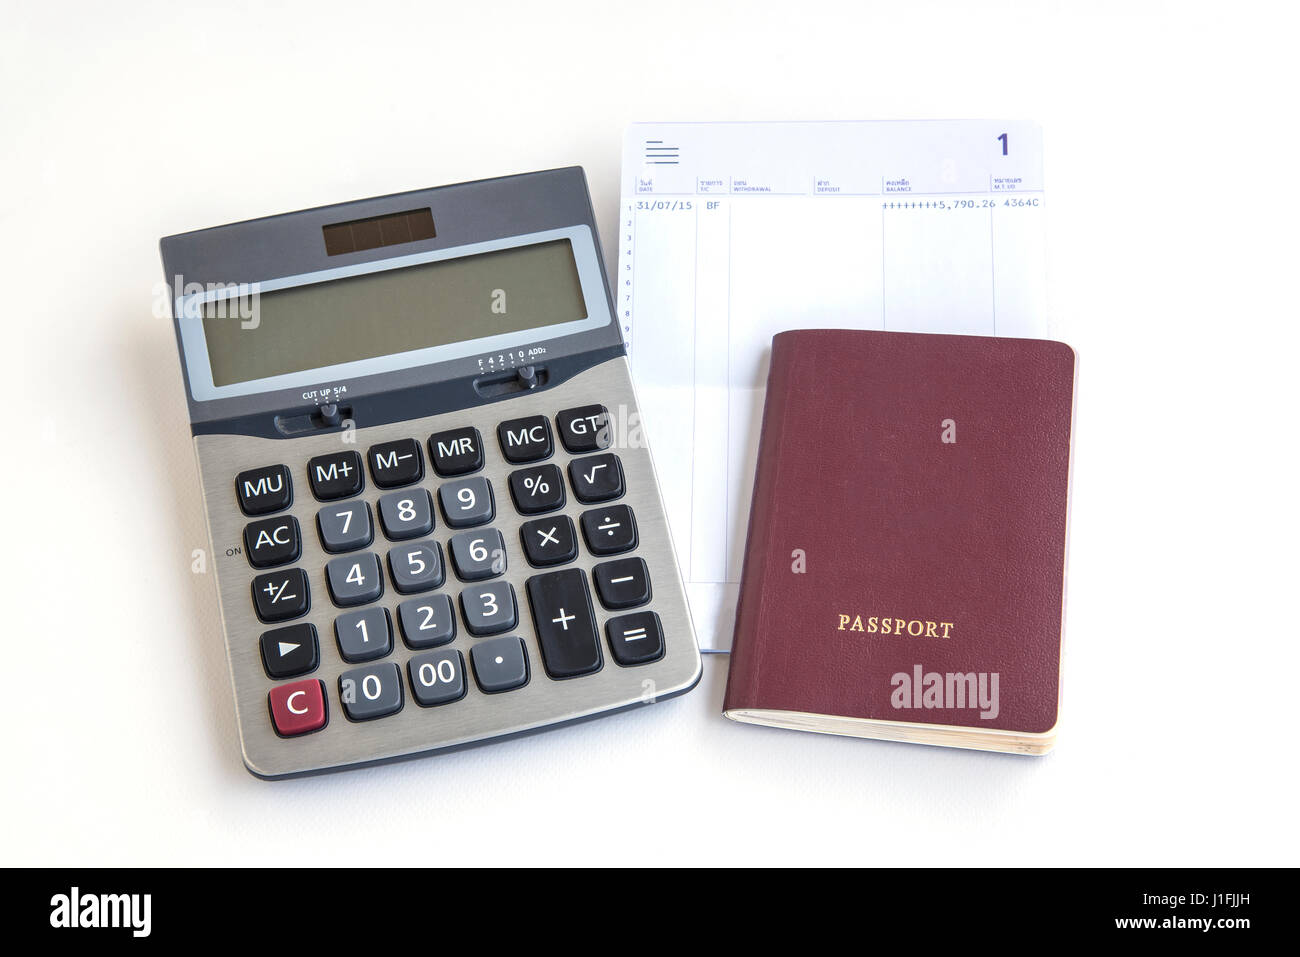 passport calculator and saving account passbook on white background Stock Photo